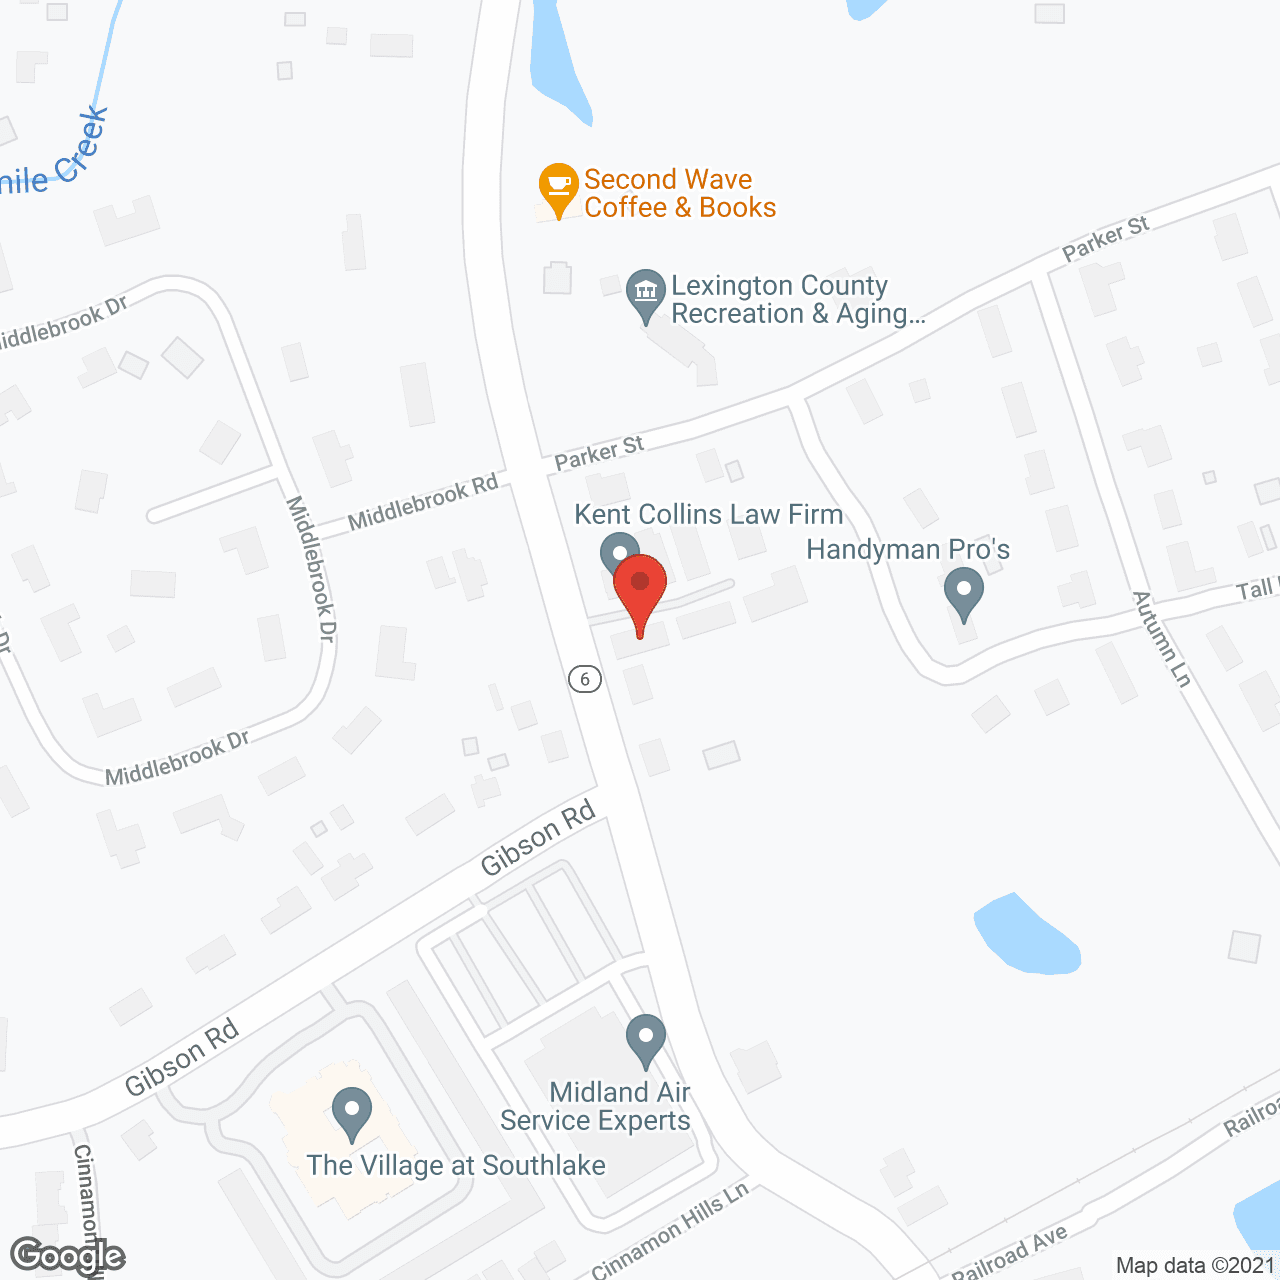 Blairhaus Zwei in google map